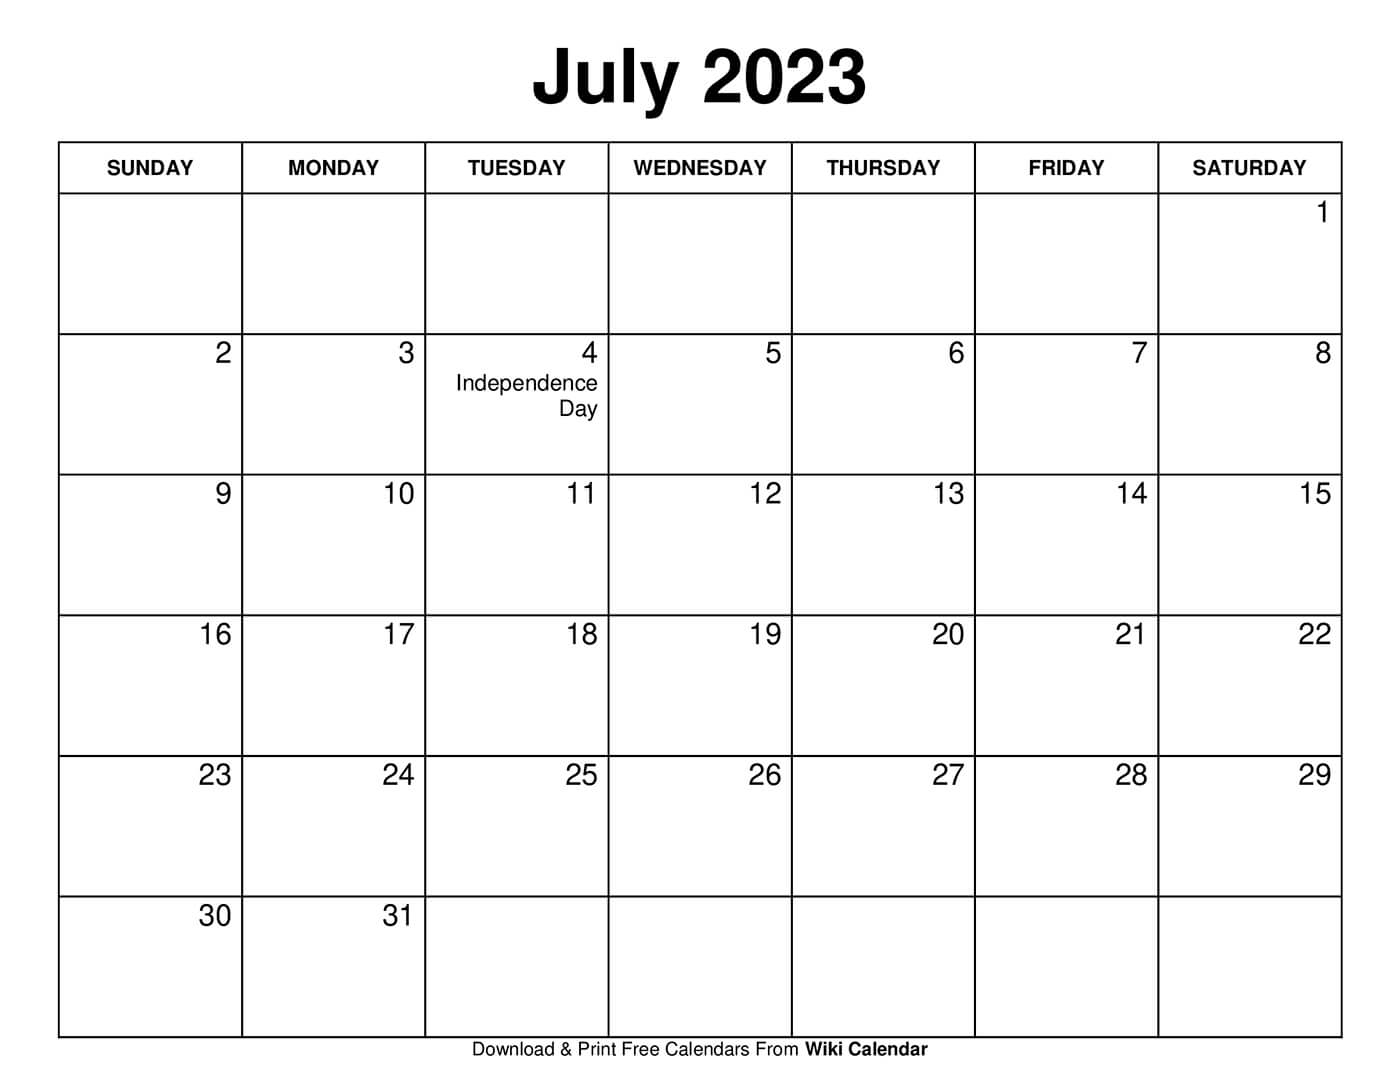 august-2023-to-july-2023-calendar-printable-get-calendar-2023-update